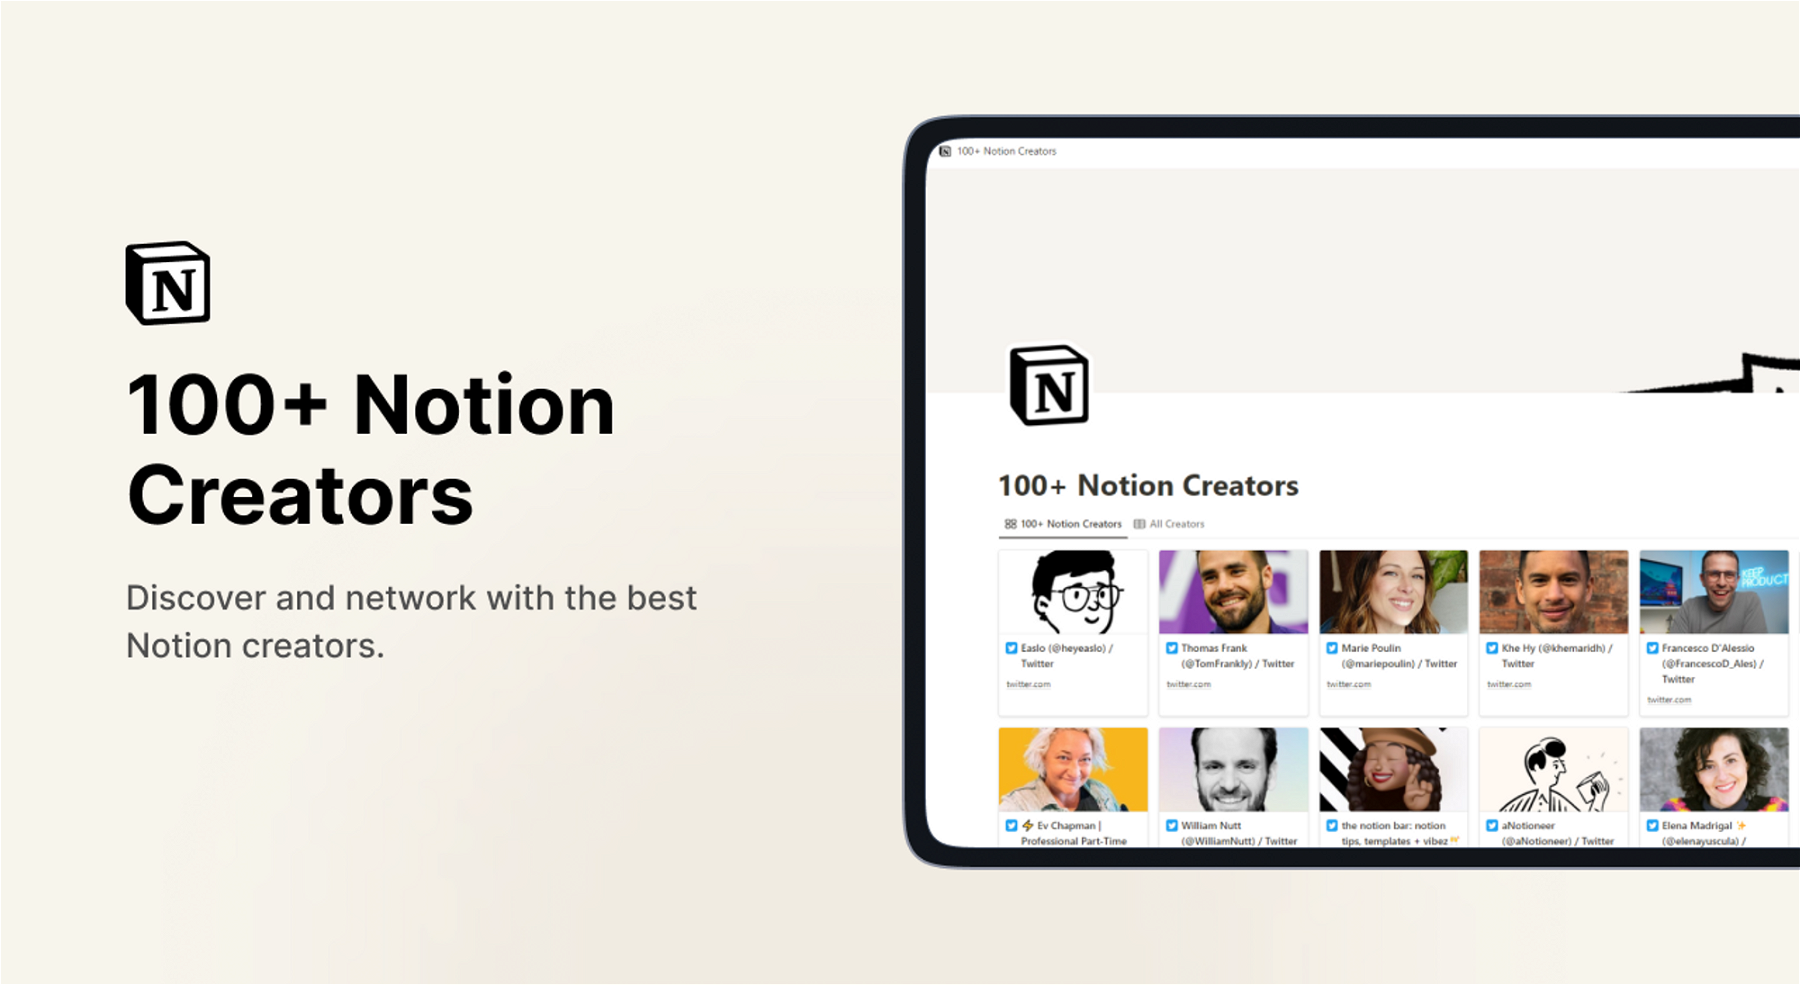 100+ Notion Creators